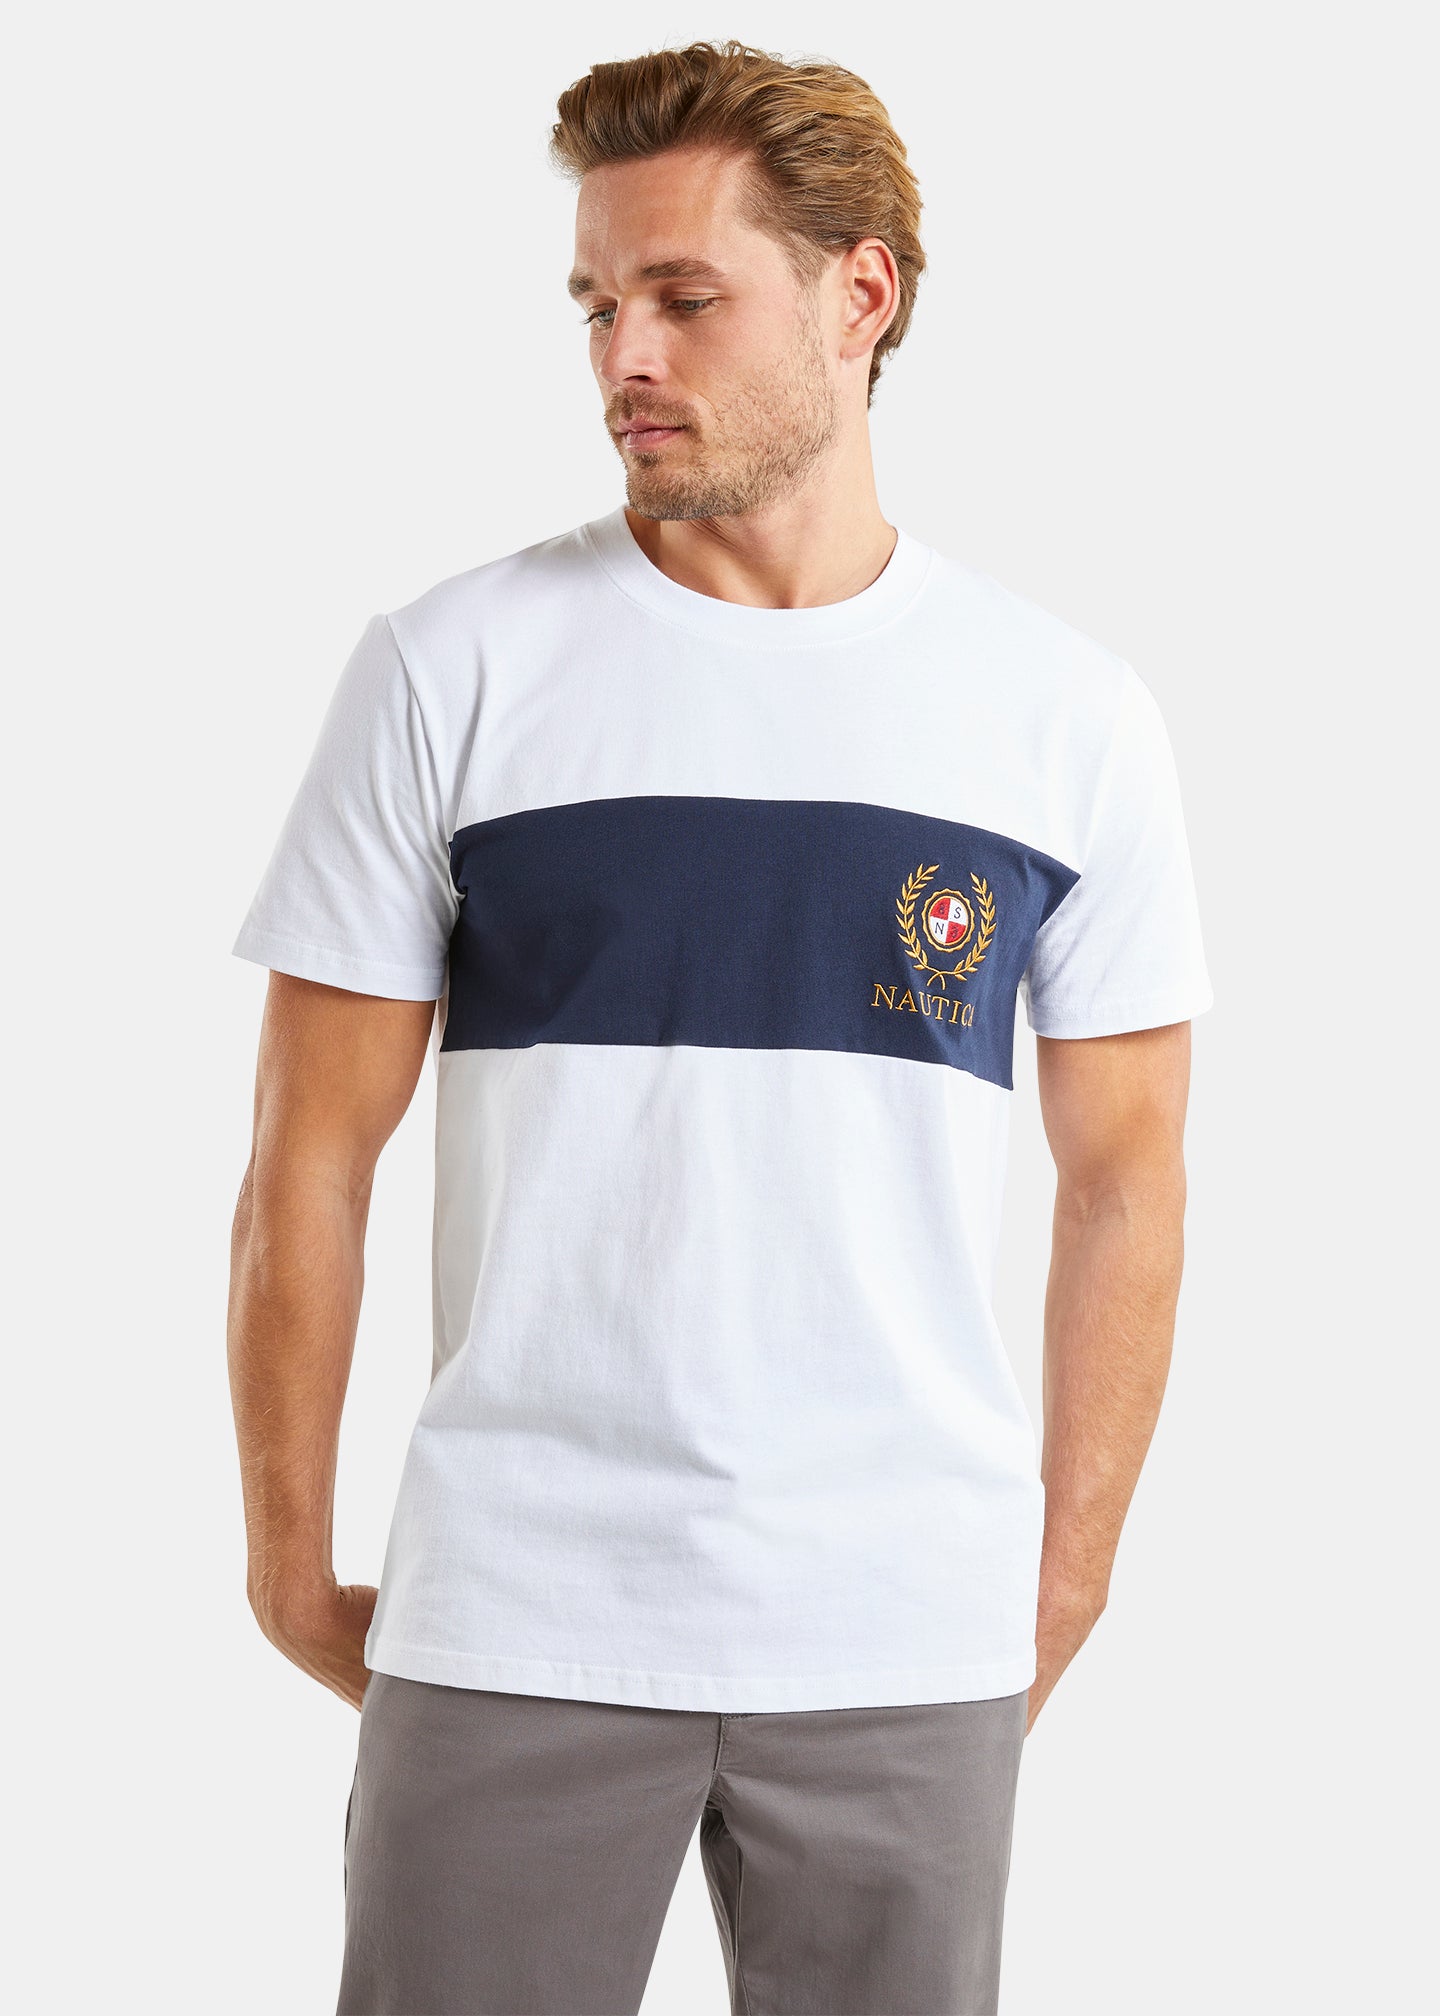 Nautica Washington T-Shirt - White - Front